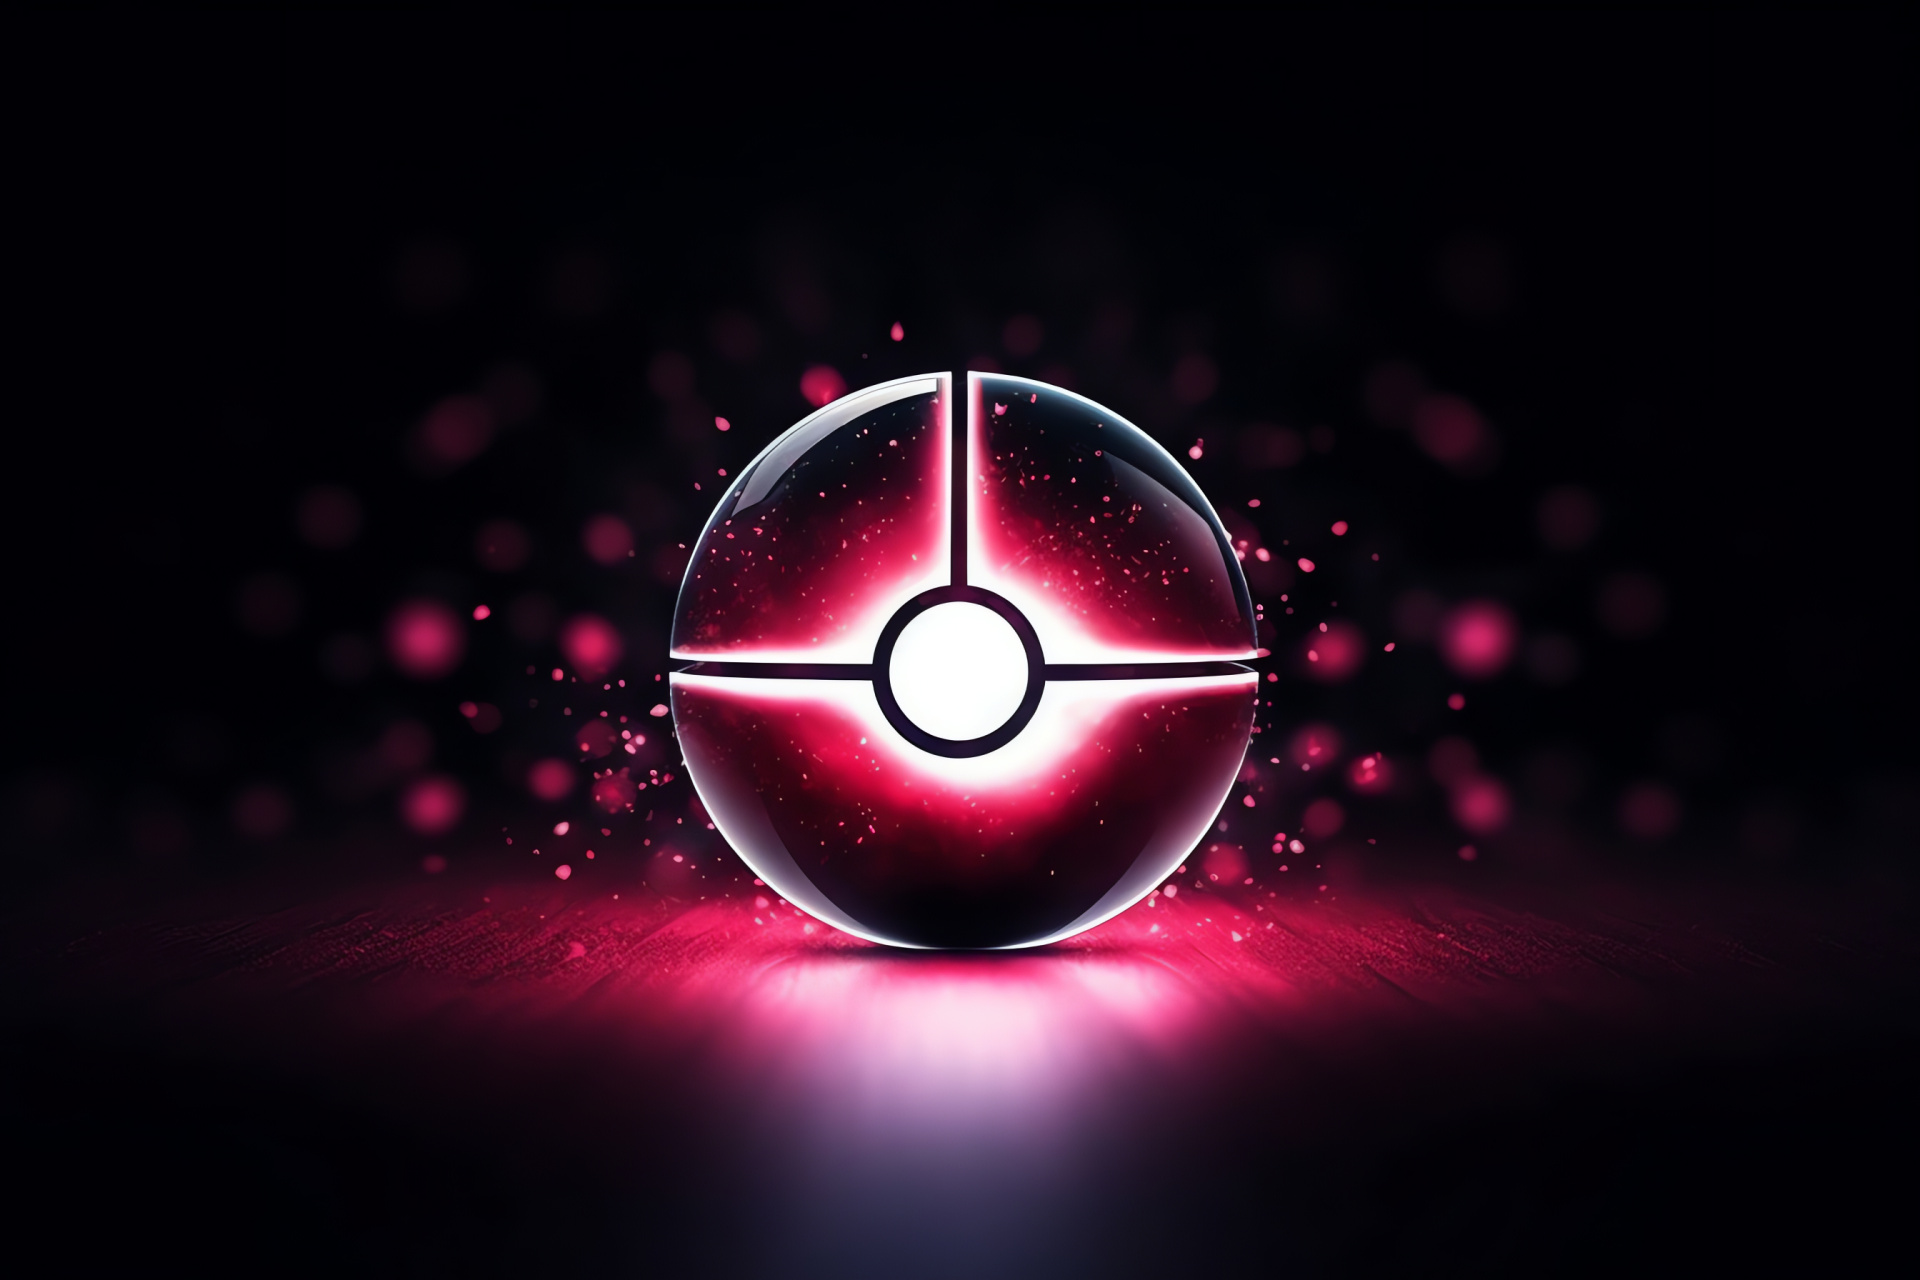 Iconic Pokeball, Gaming symbol, Spherical design, Monochrome hemisphere, Simple central motif, HD Desktop Image